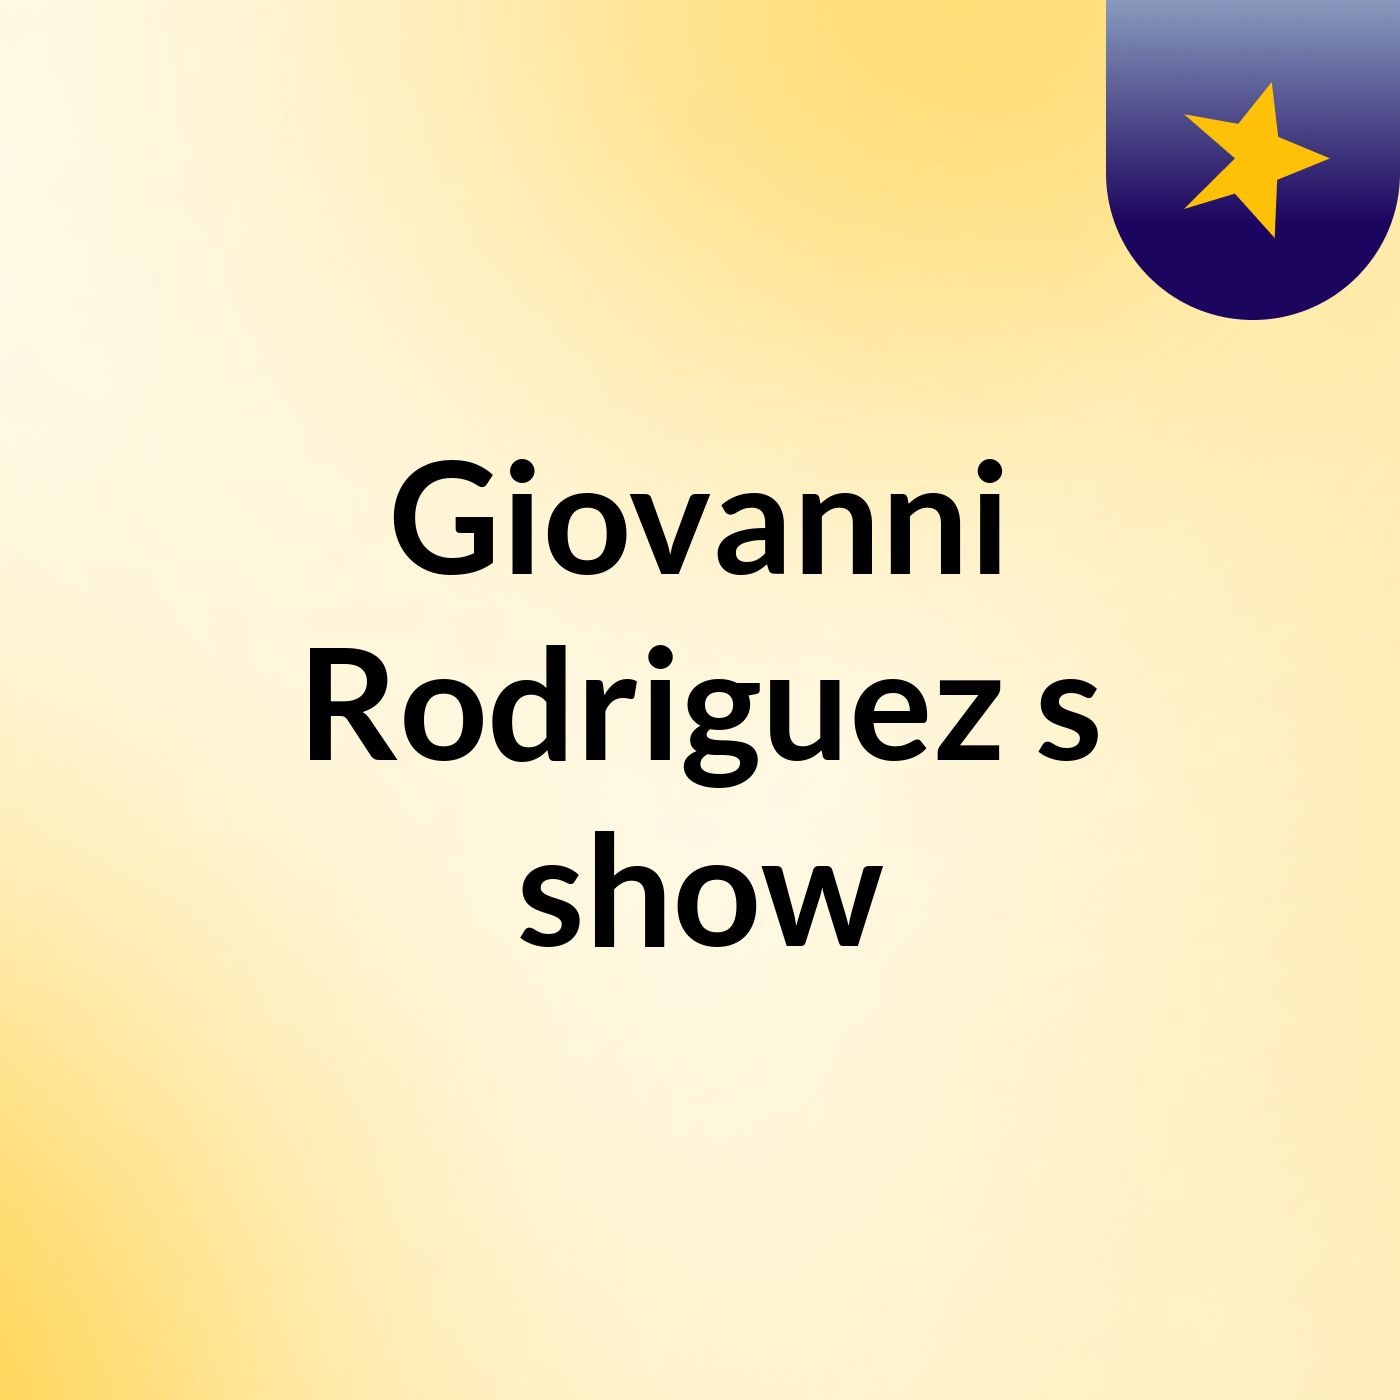 Giovanni Rodriguez's show